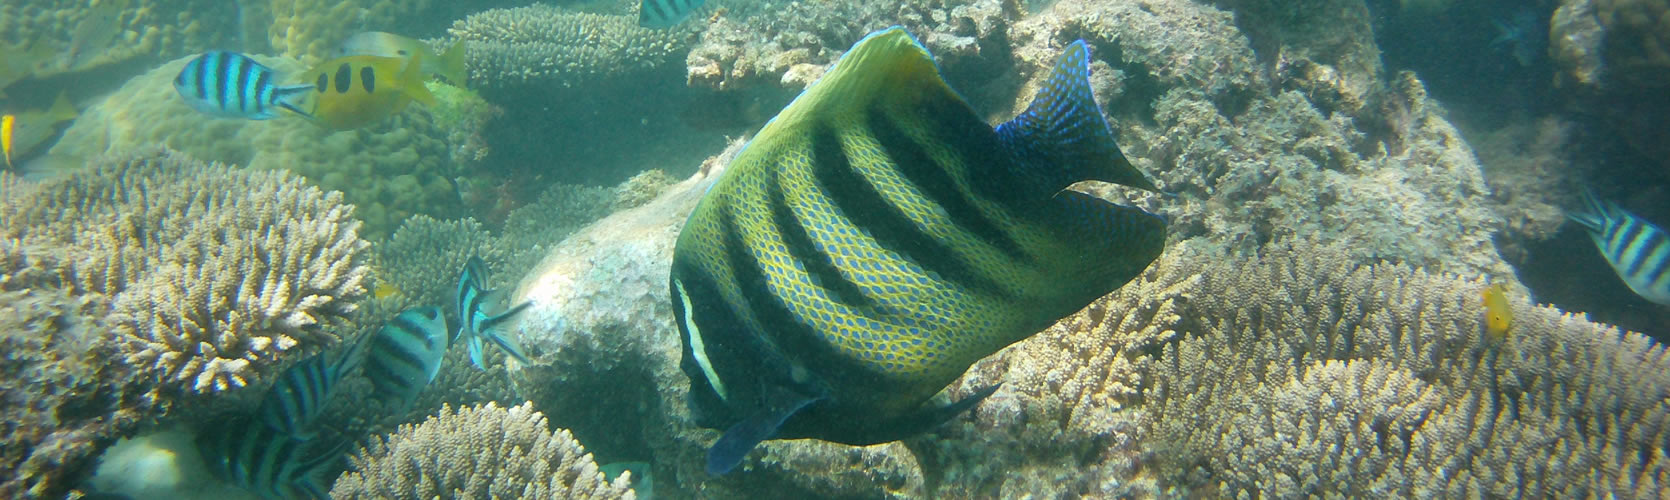 The Ningaloo Reef